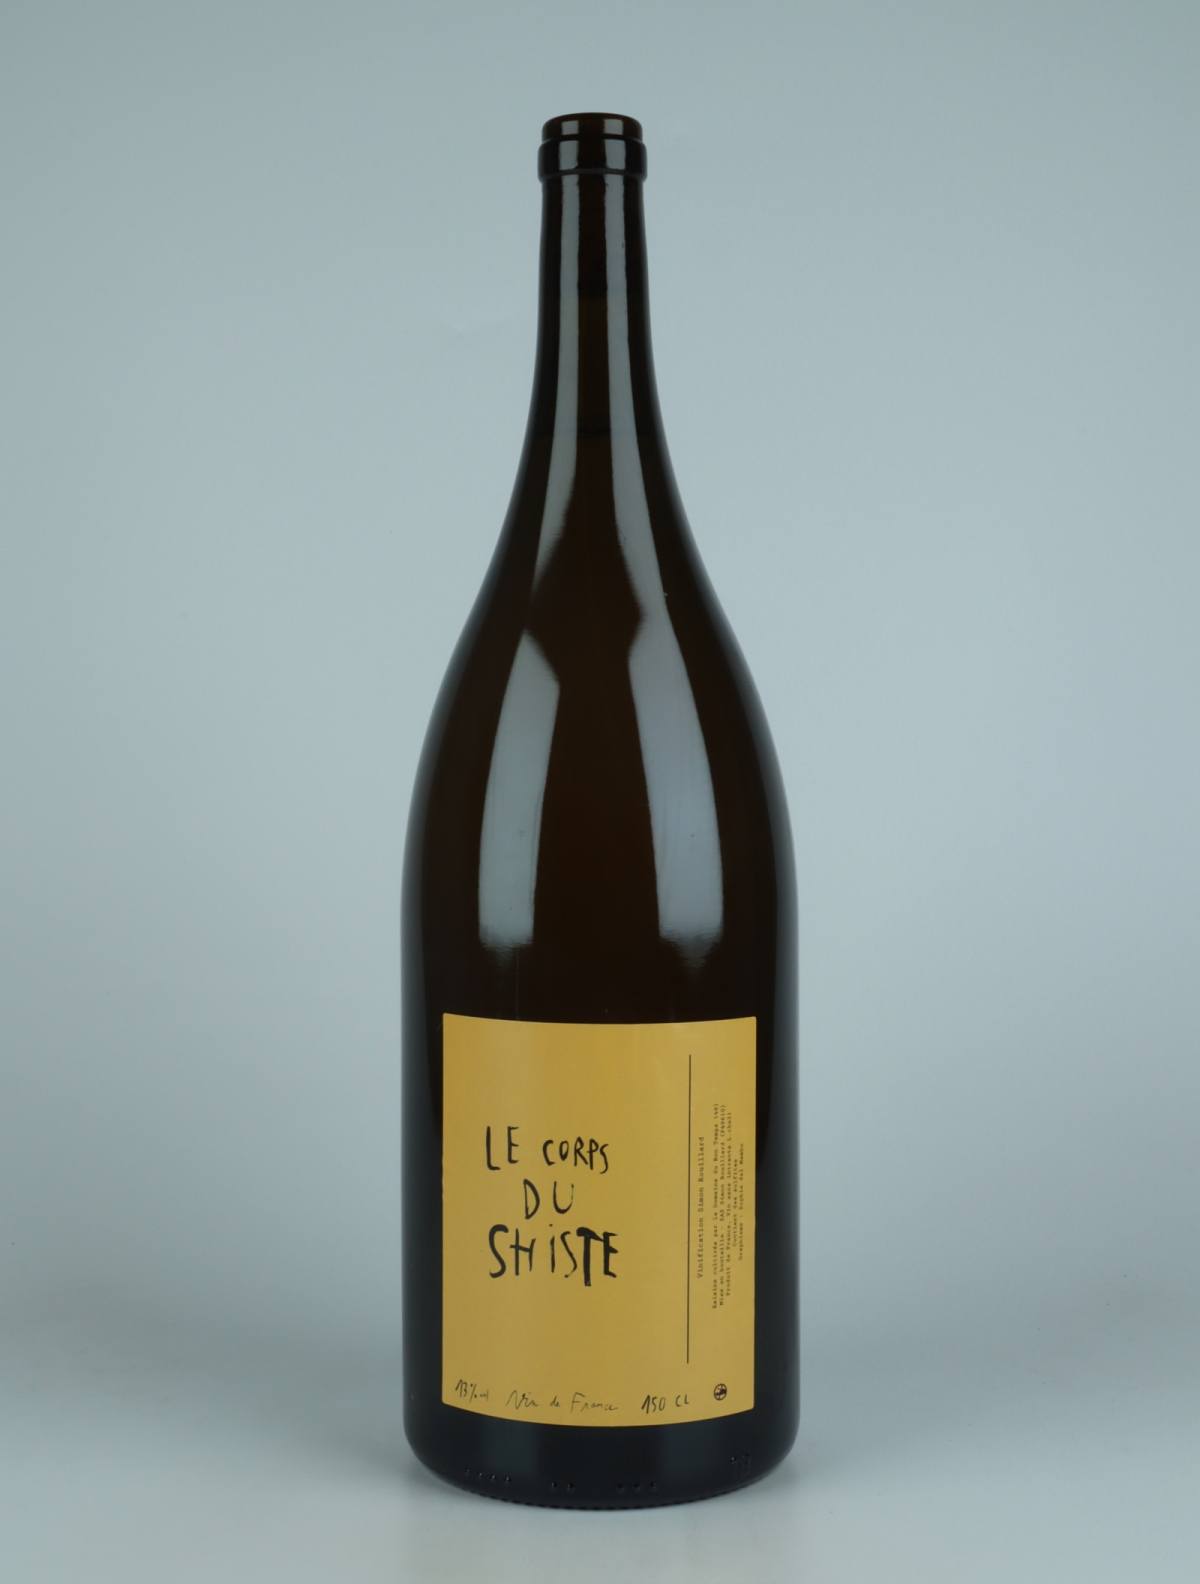 A bottle 2021 Le Corps du Shiste - Magnum White wine from Simon Rouillard, Loire in France